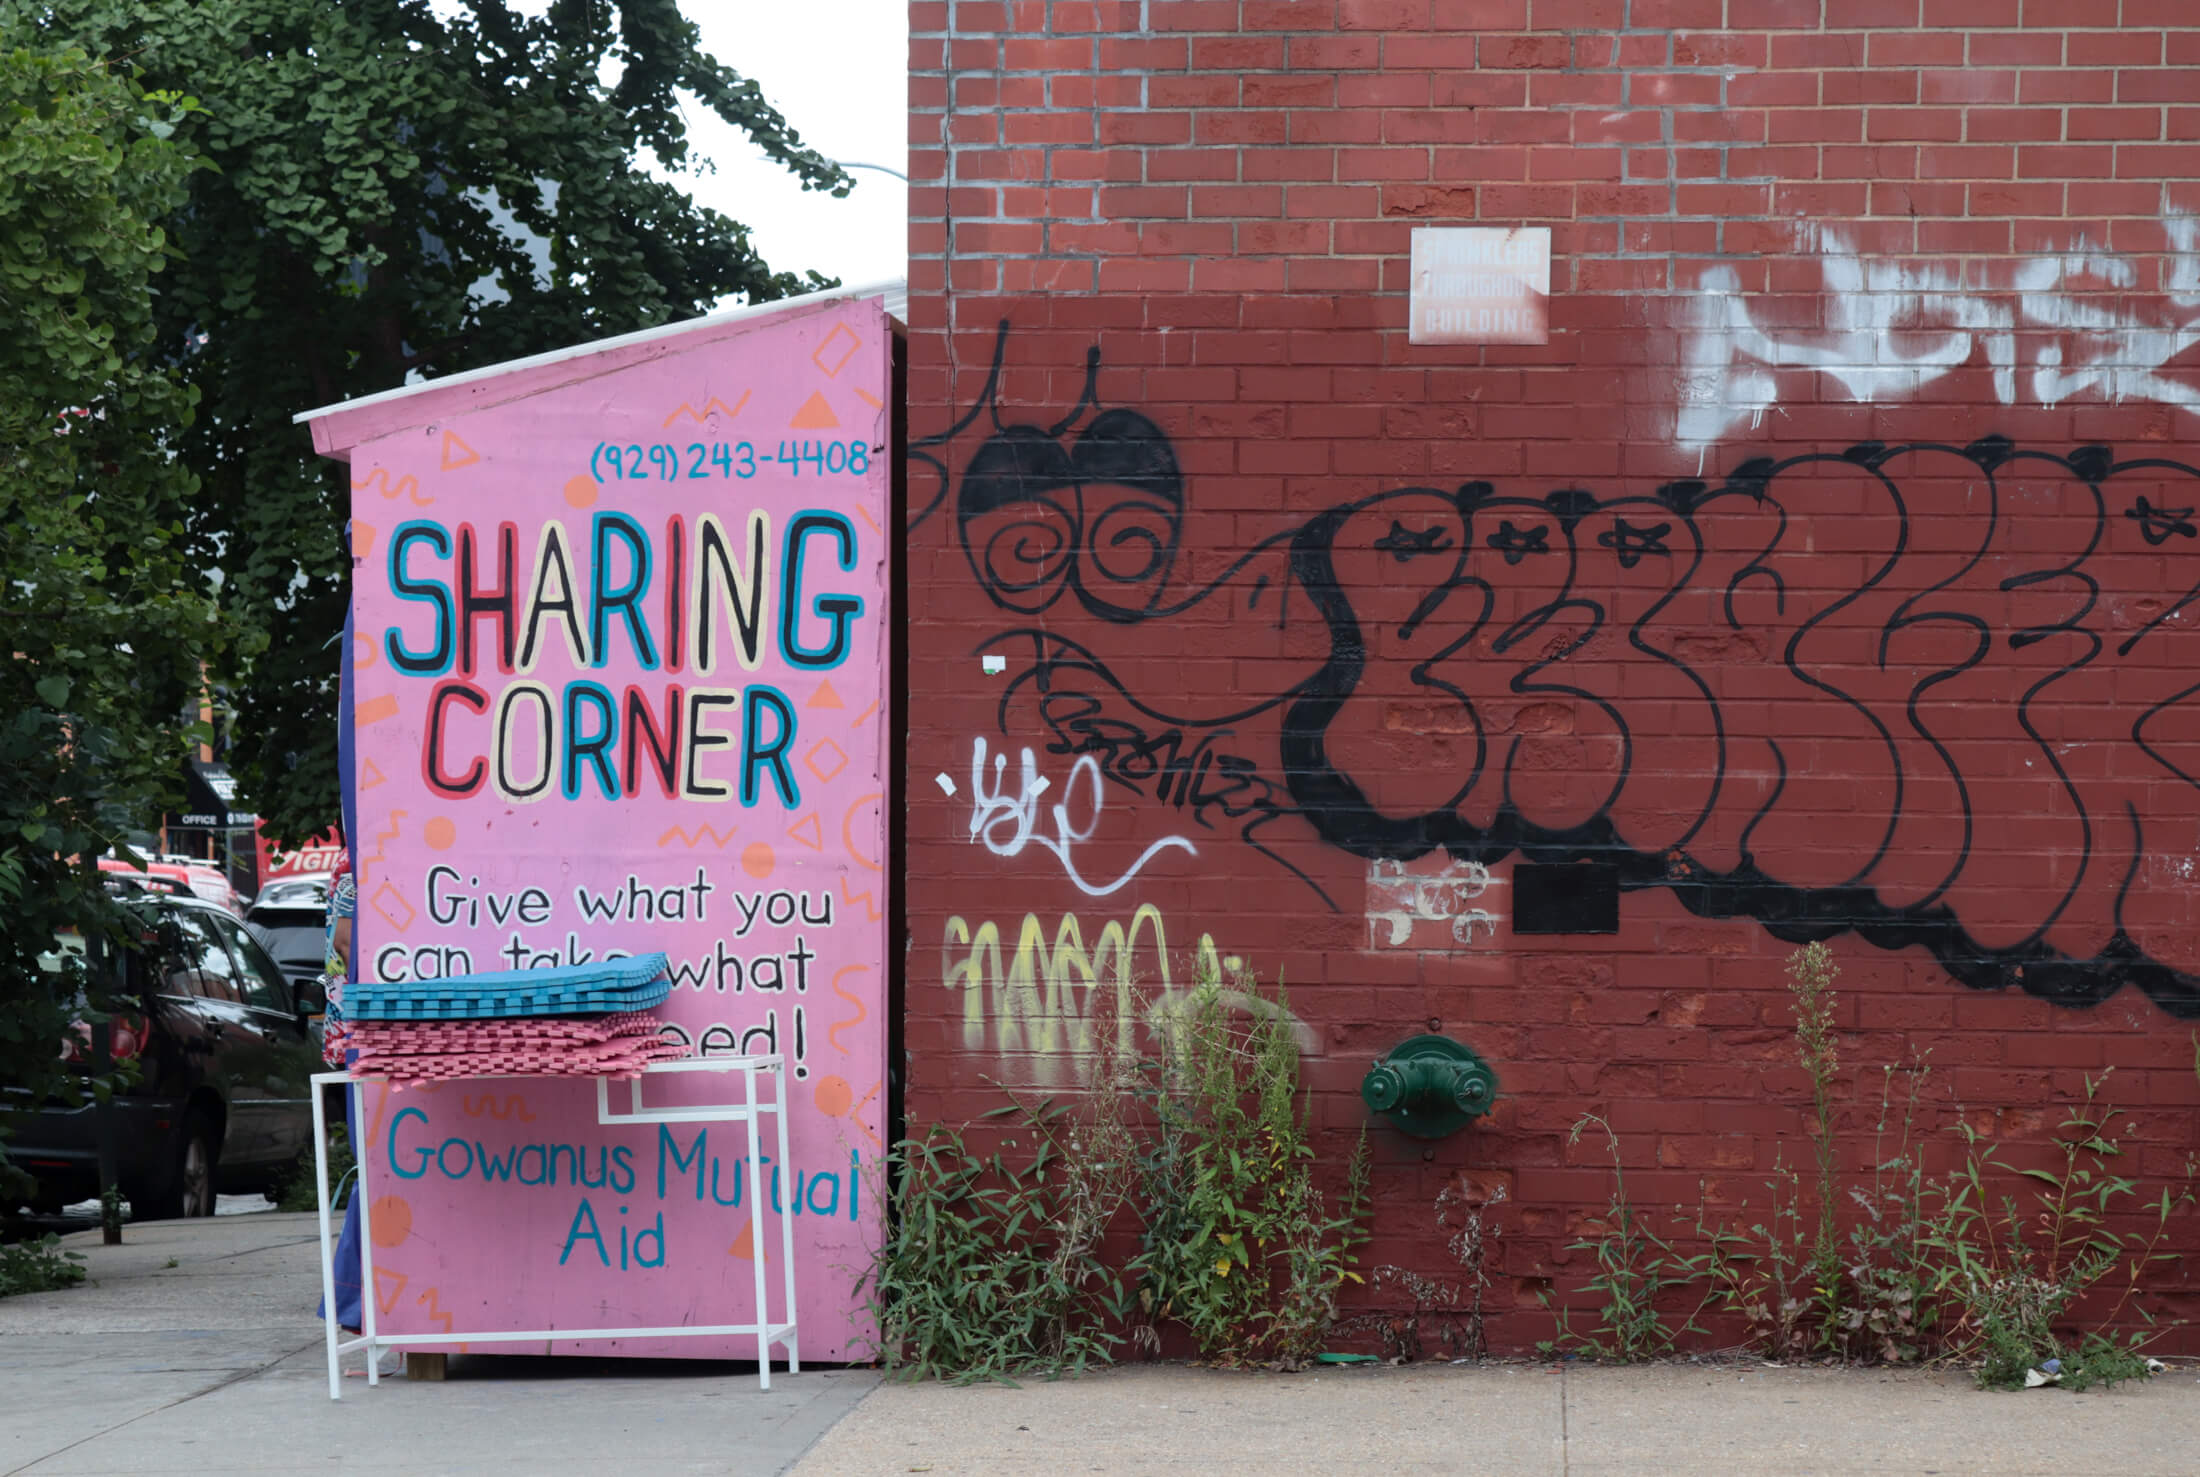 Mutual Aid sharing corner in gowanus brooklyn